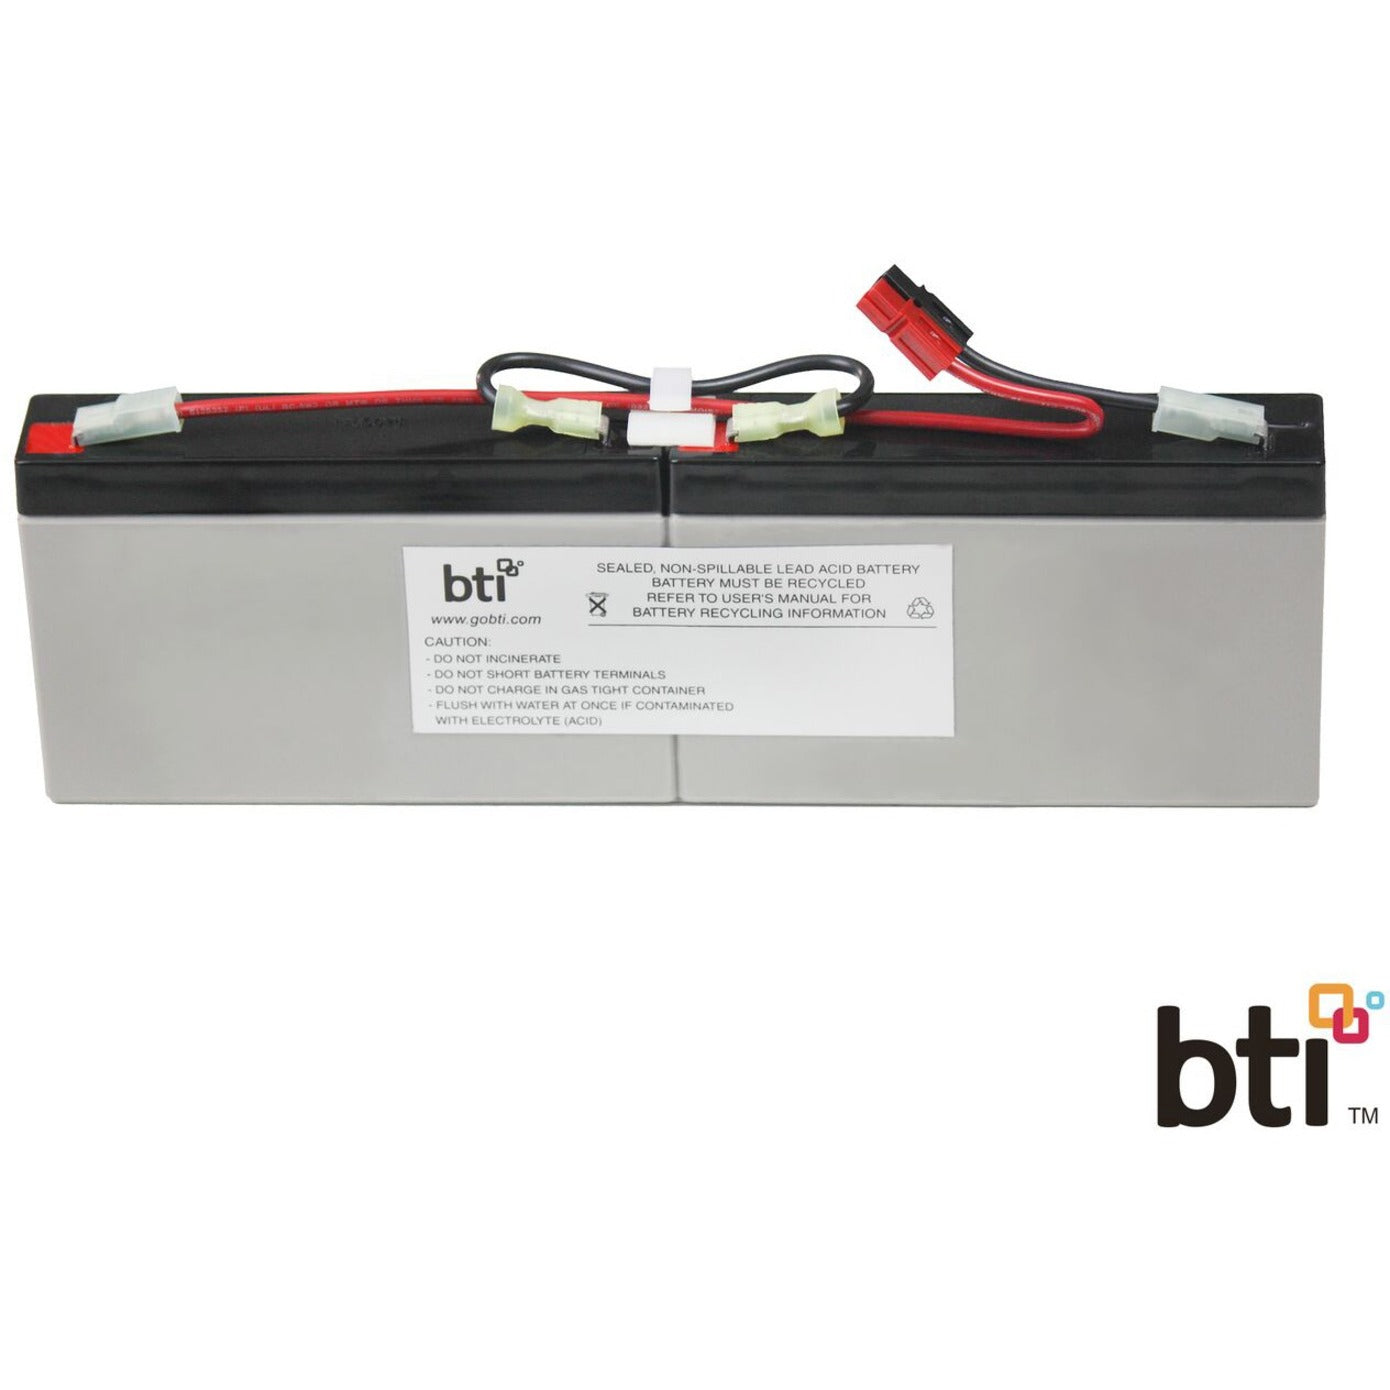 BTI RBC18-SLA18-BTI UPS Replacement Battery Cartridge #18, Lead Acid, 6V DC, Maintenance-free